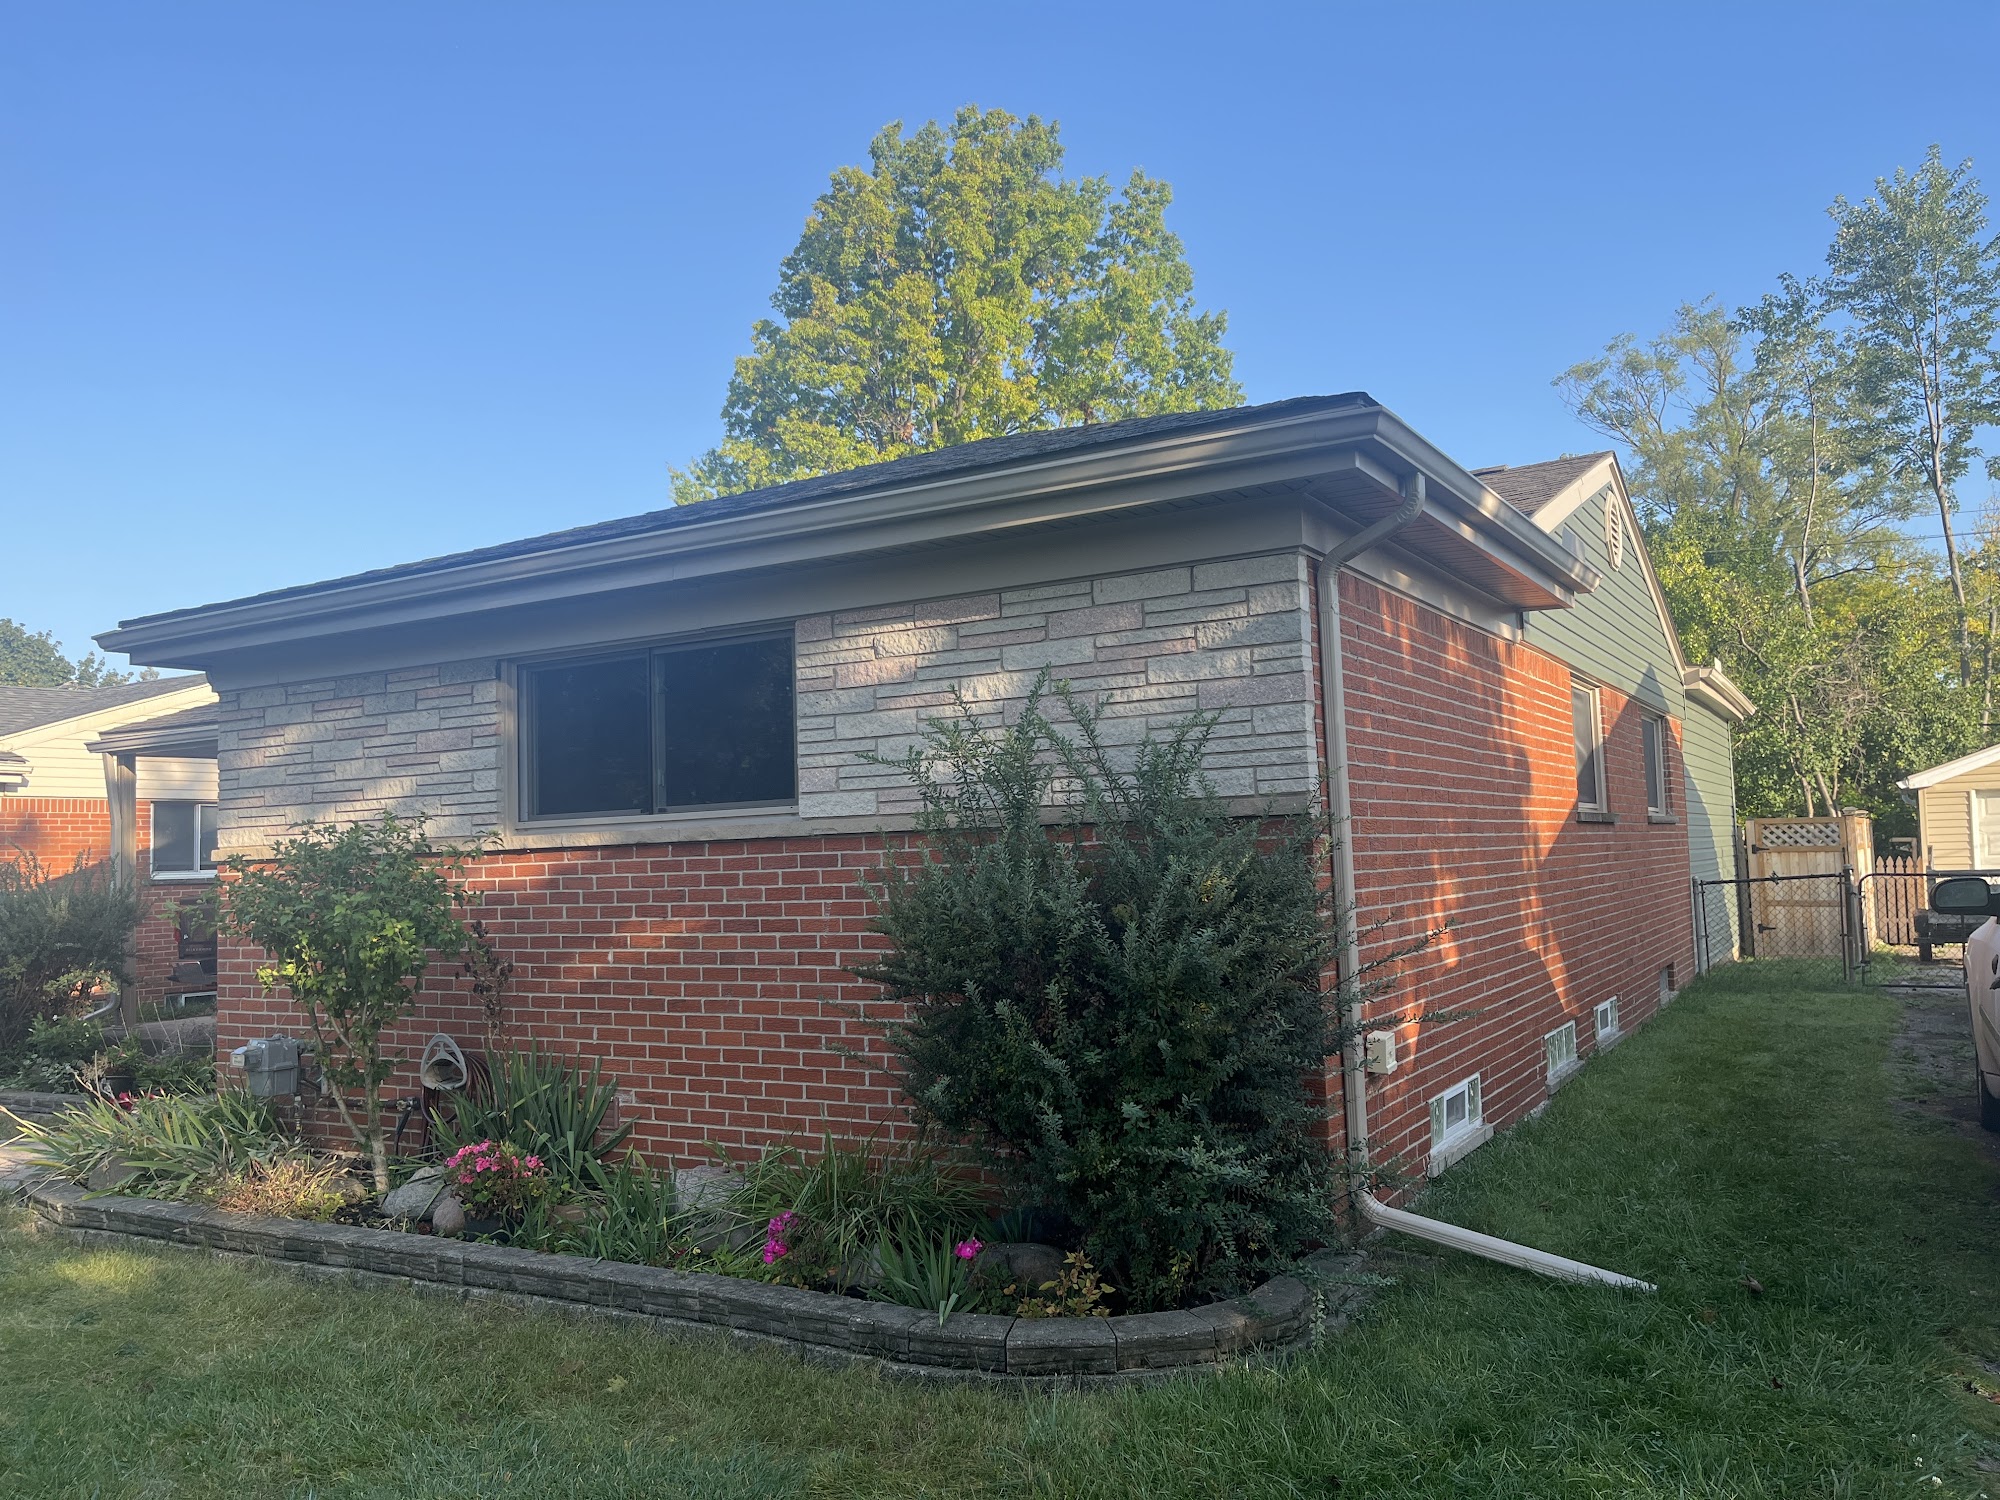 Excel Home Improvement 28345 Goddard Rd, Romulus Michigan 48174